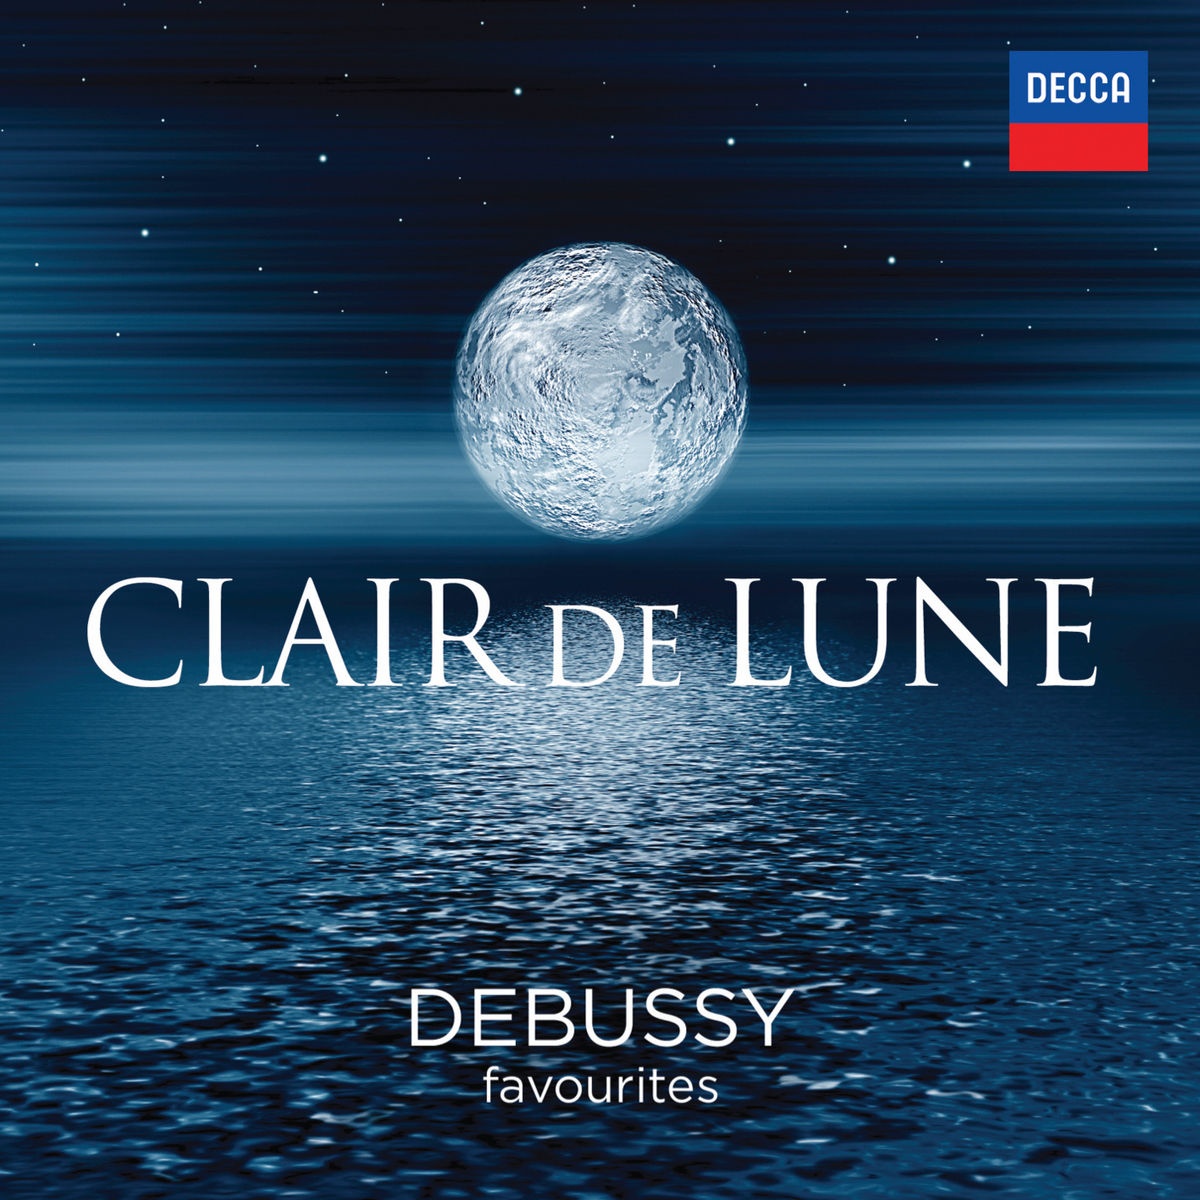 Debussy: Deux Arabesques L. 66 - No. 1 Andante con moto